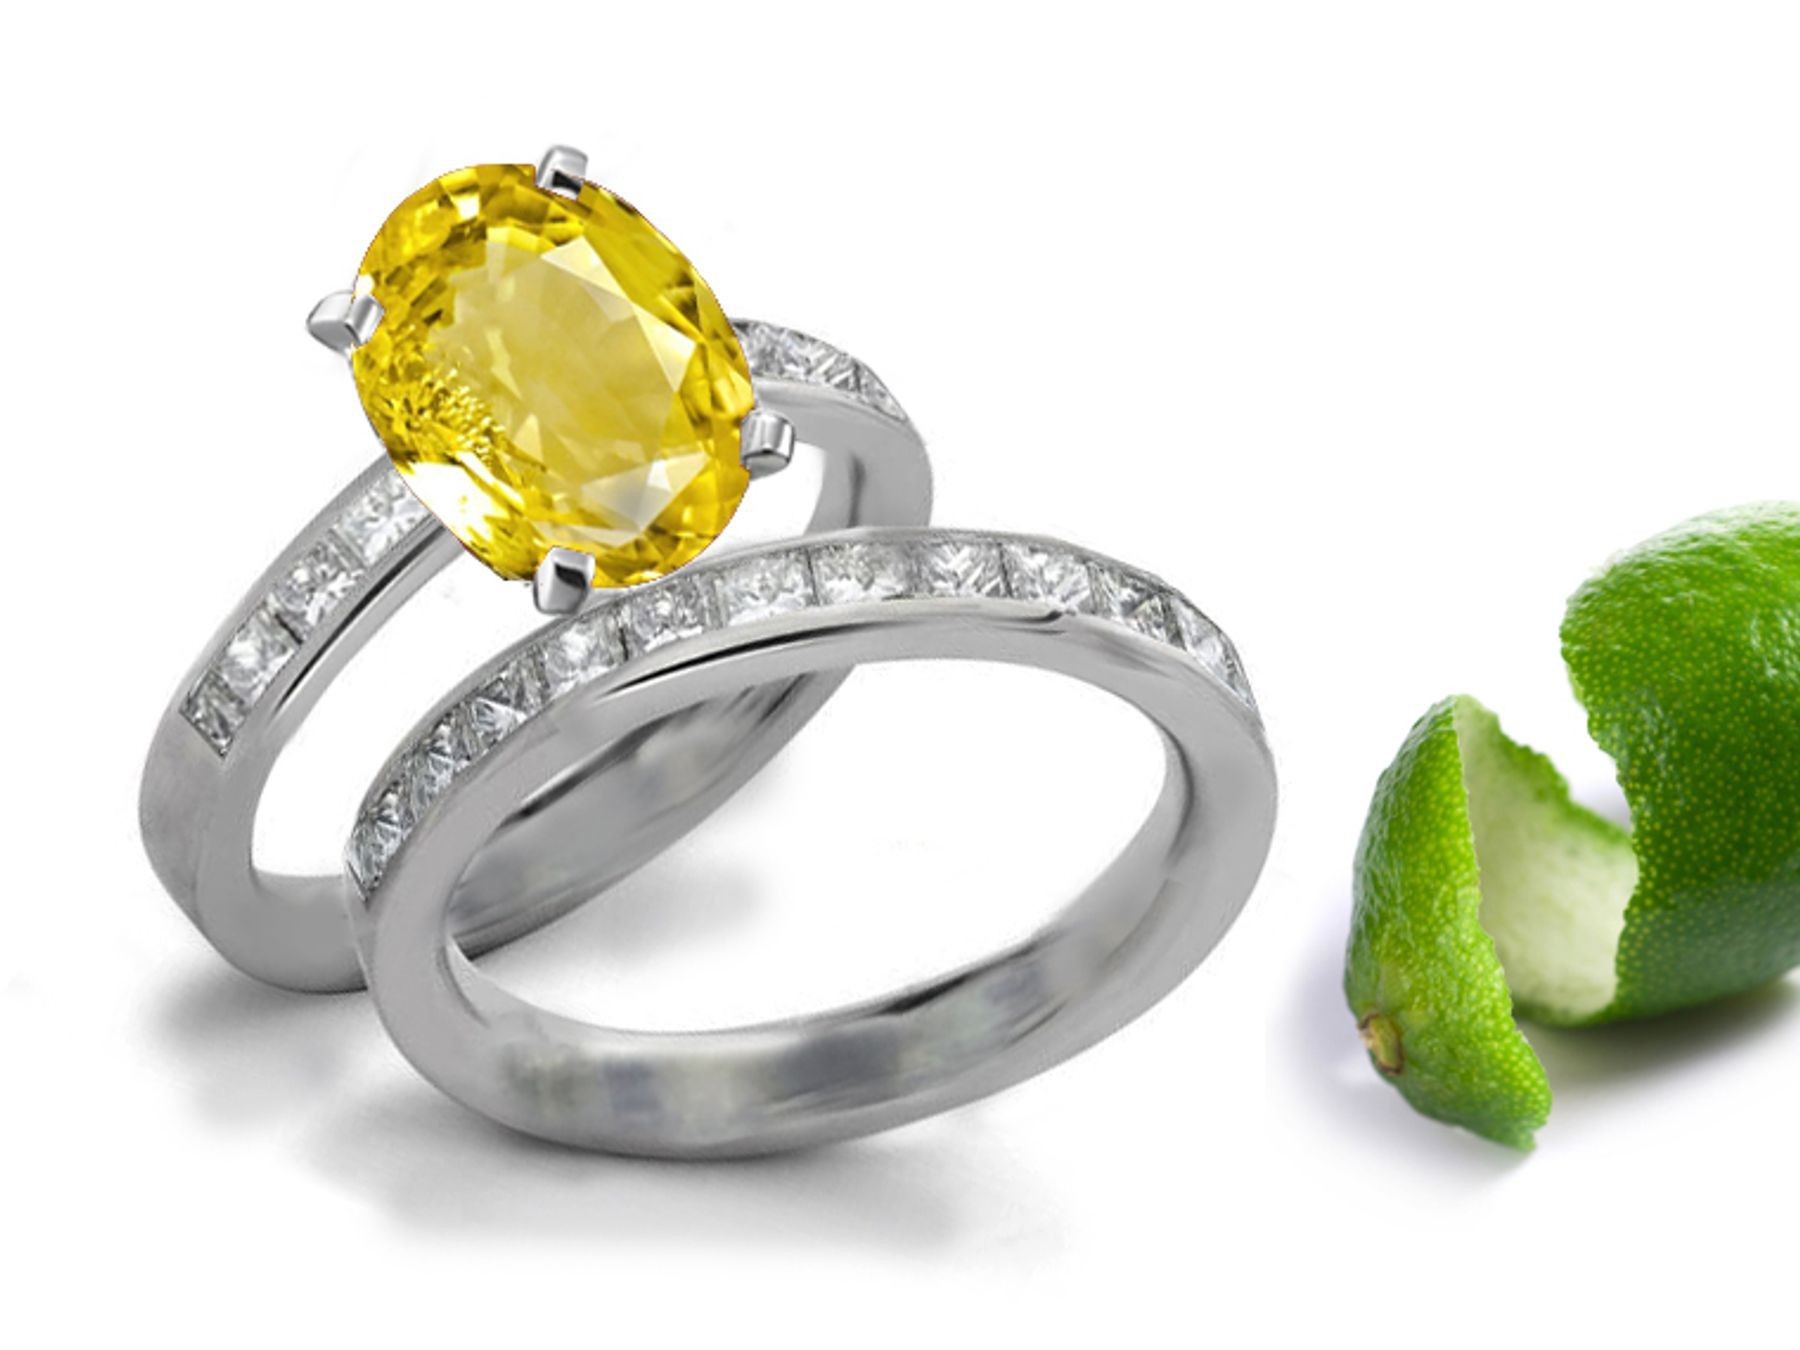 Style & Design: Pure Rich Yellow Sapphire Diamond Engagement & Wedding Bands